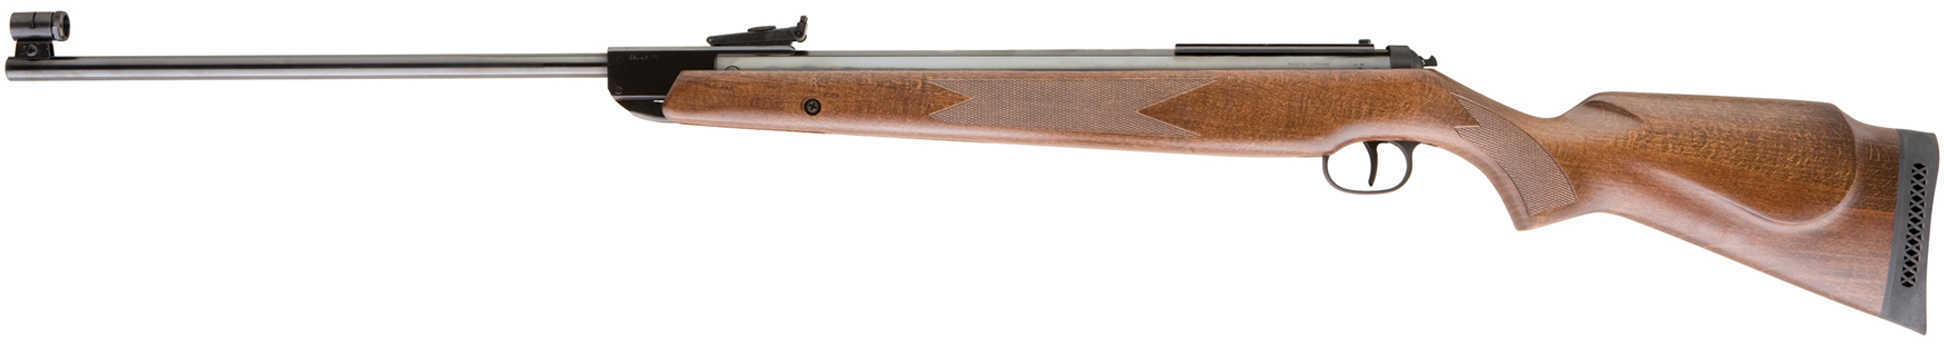 Umarex RWS Model 350 Magnum 22 Pellet - Brand New